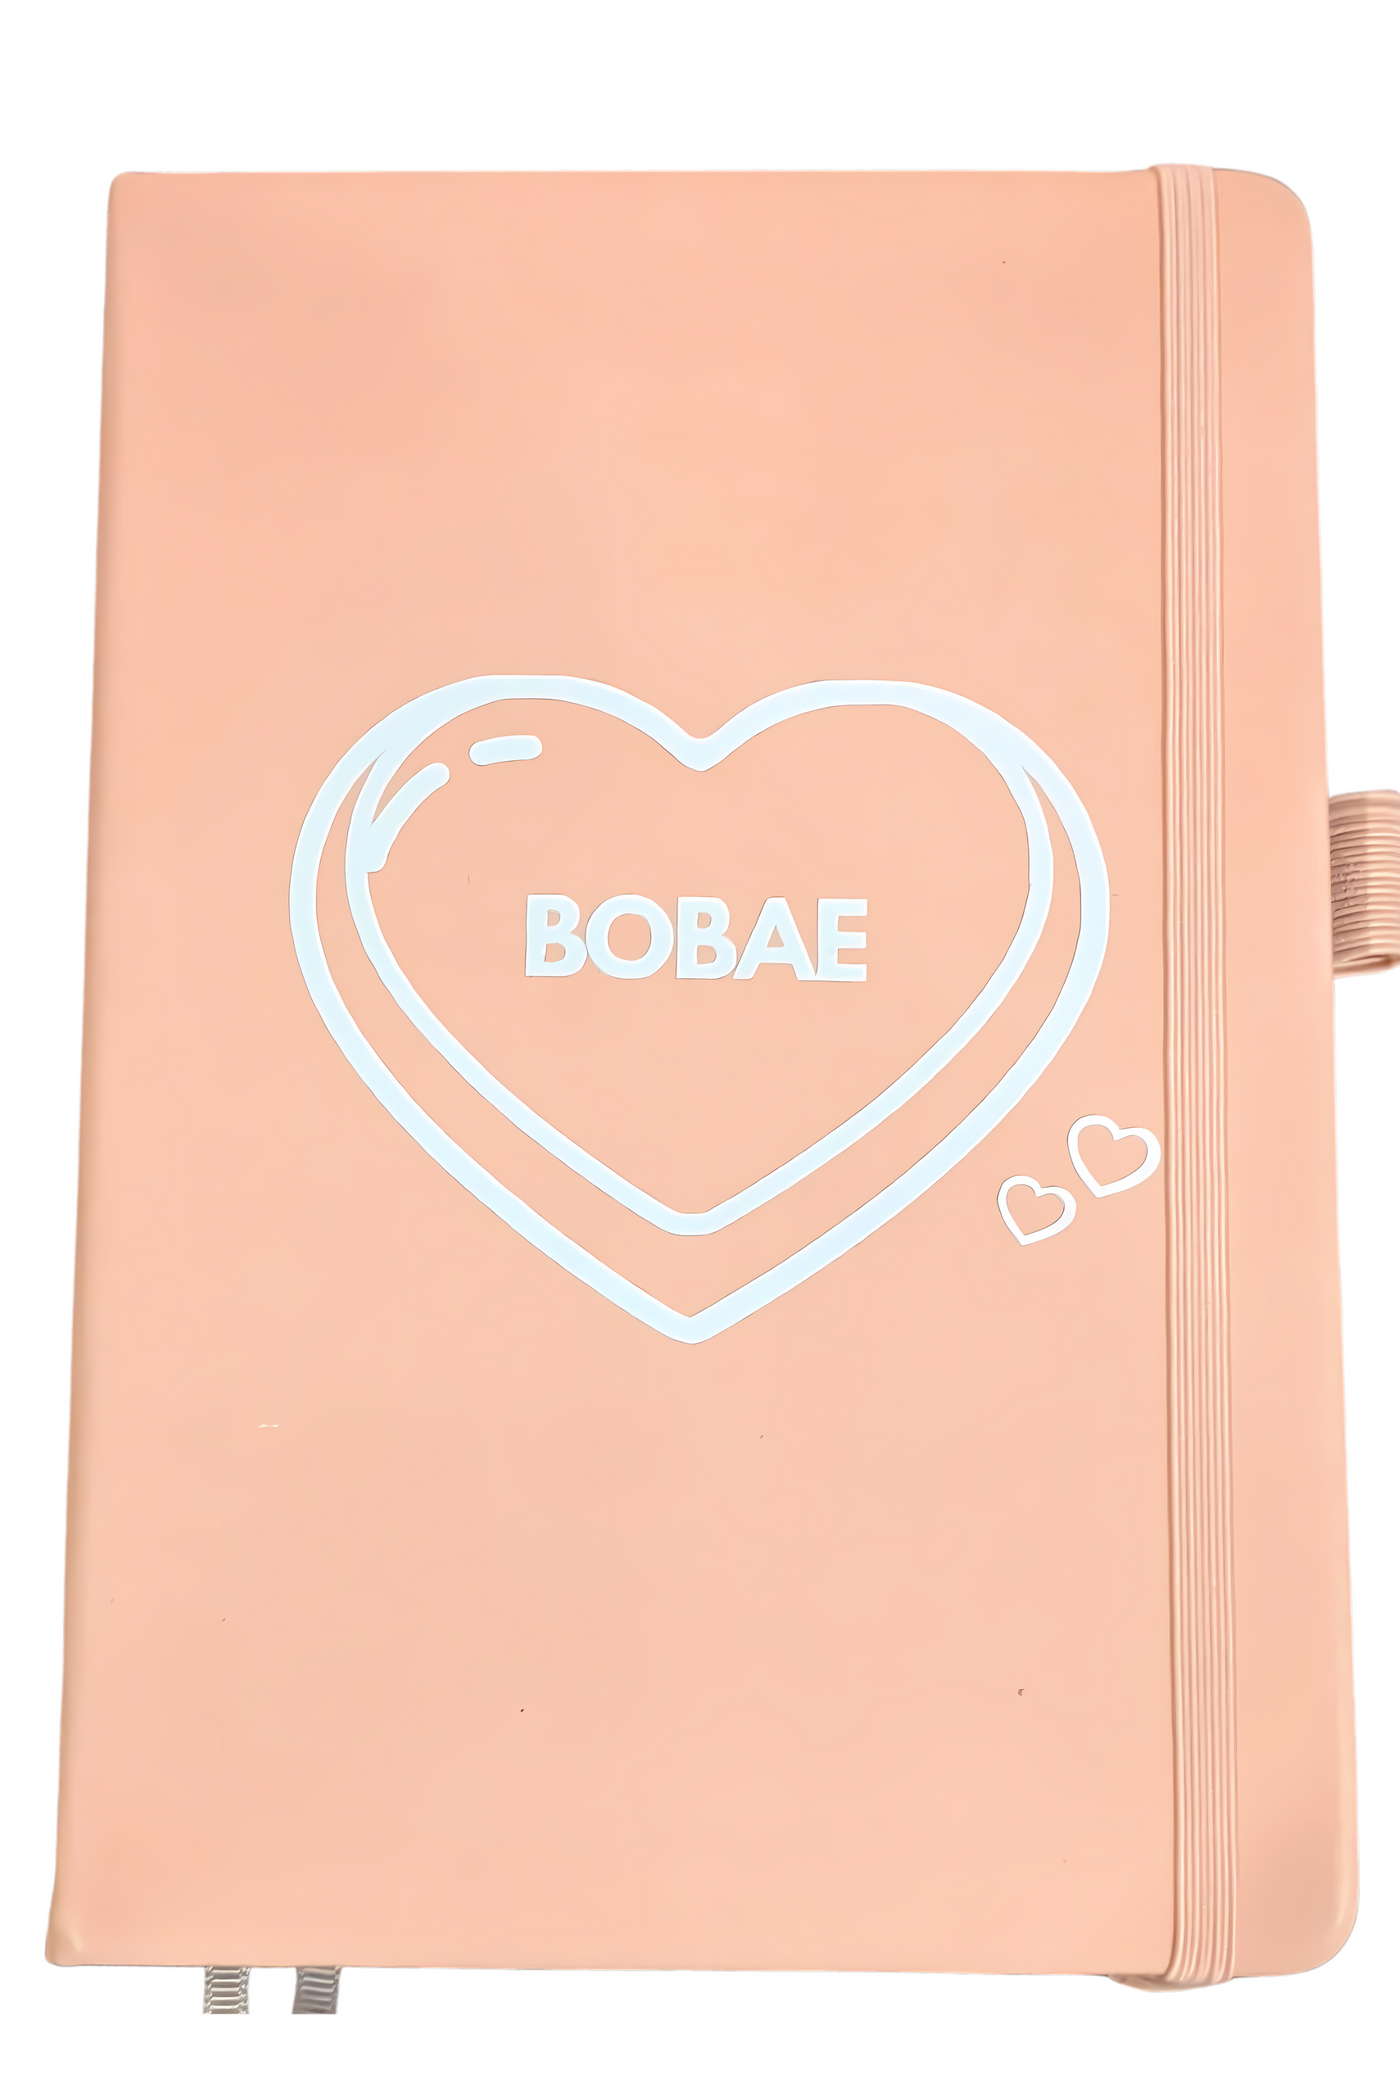 Bobae Journal